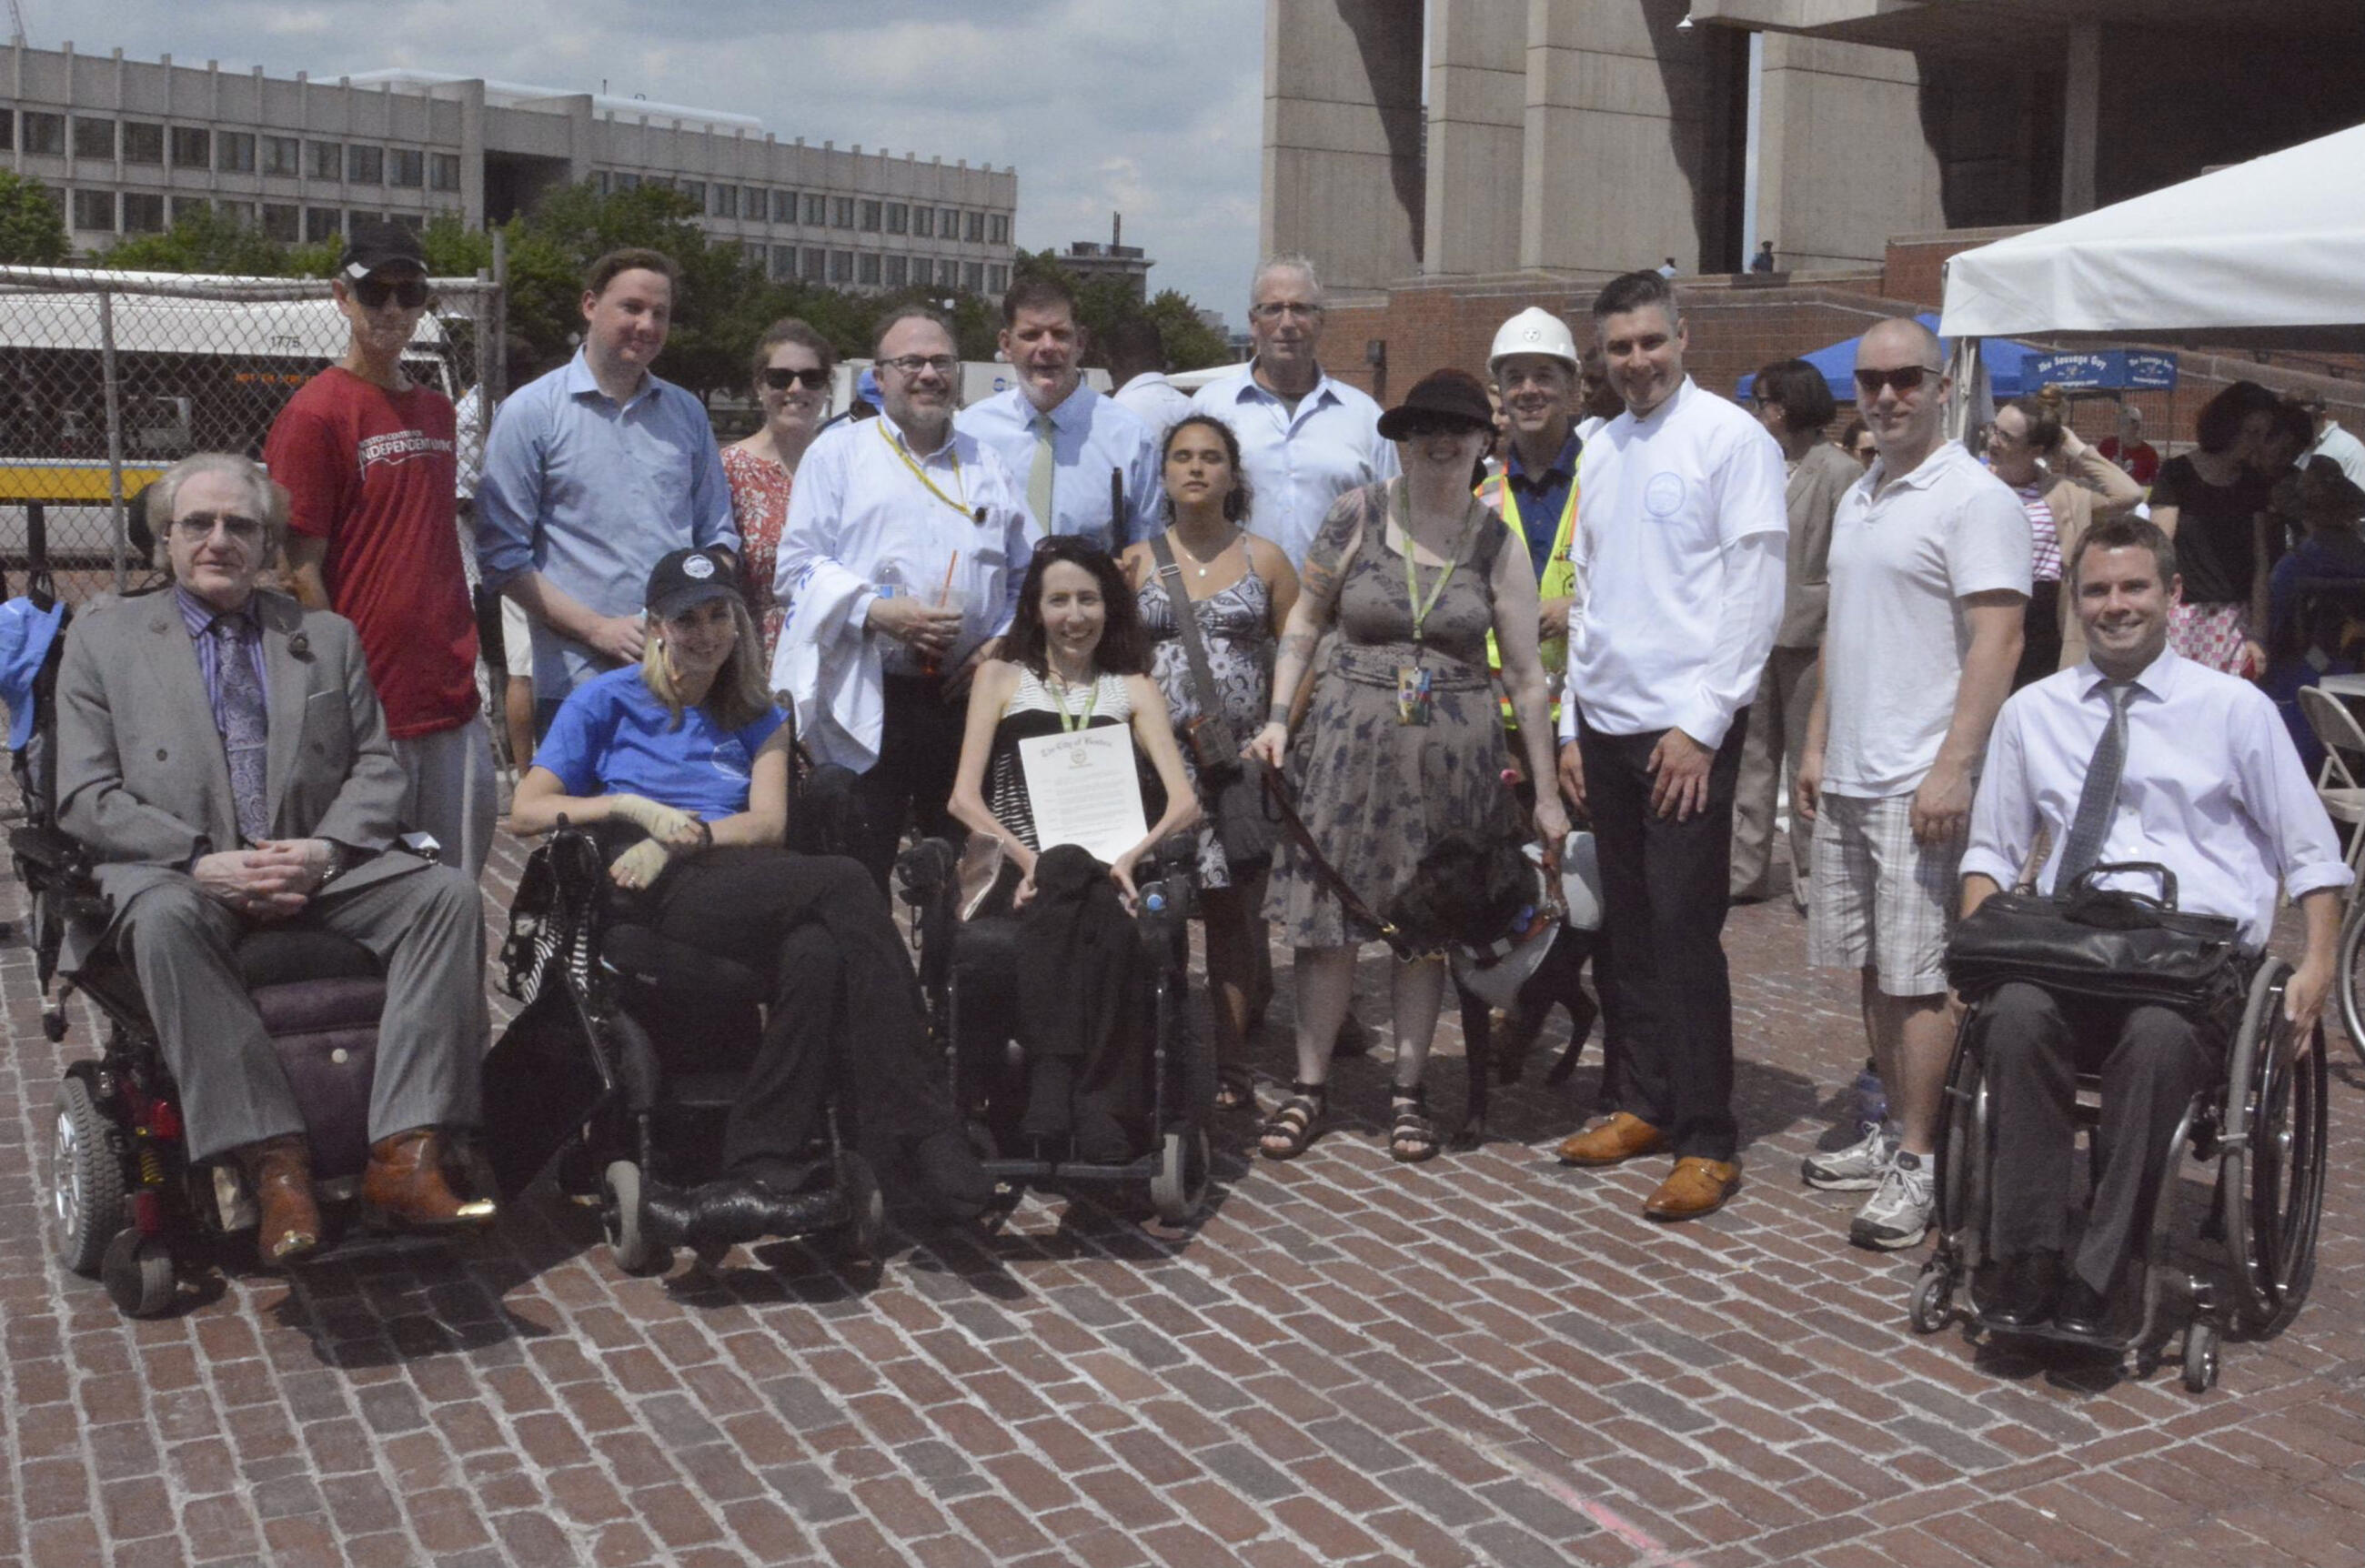 MBTA staff and former Boston Mayor Marty Walsh celebrating SWA Day at City Hall Plaza